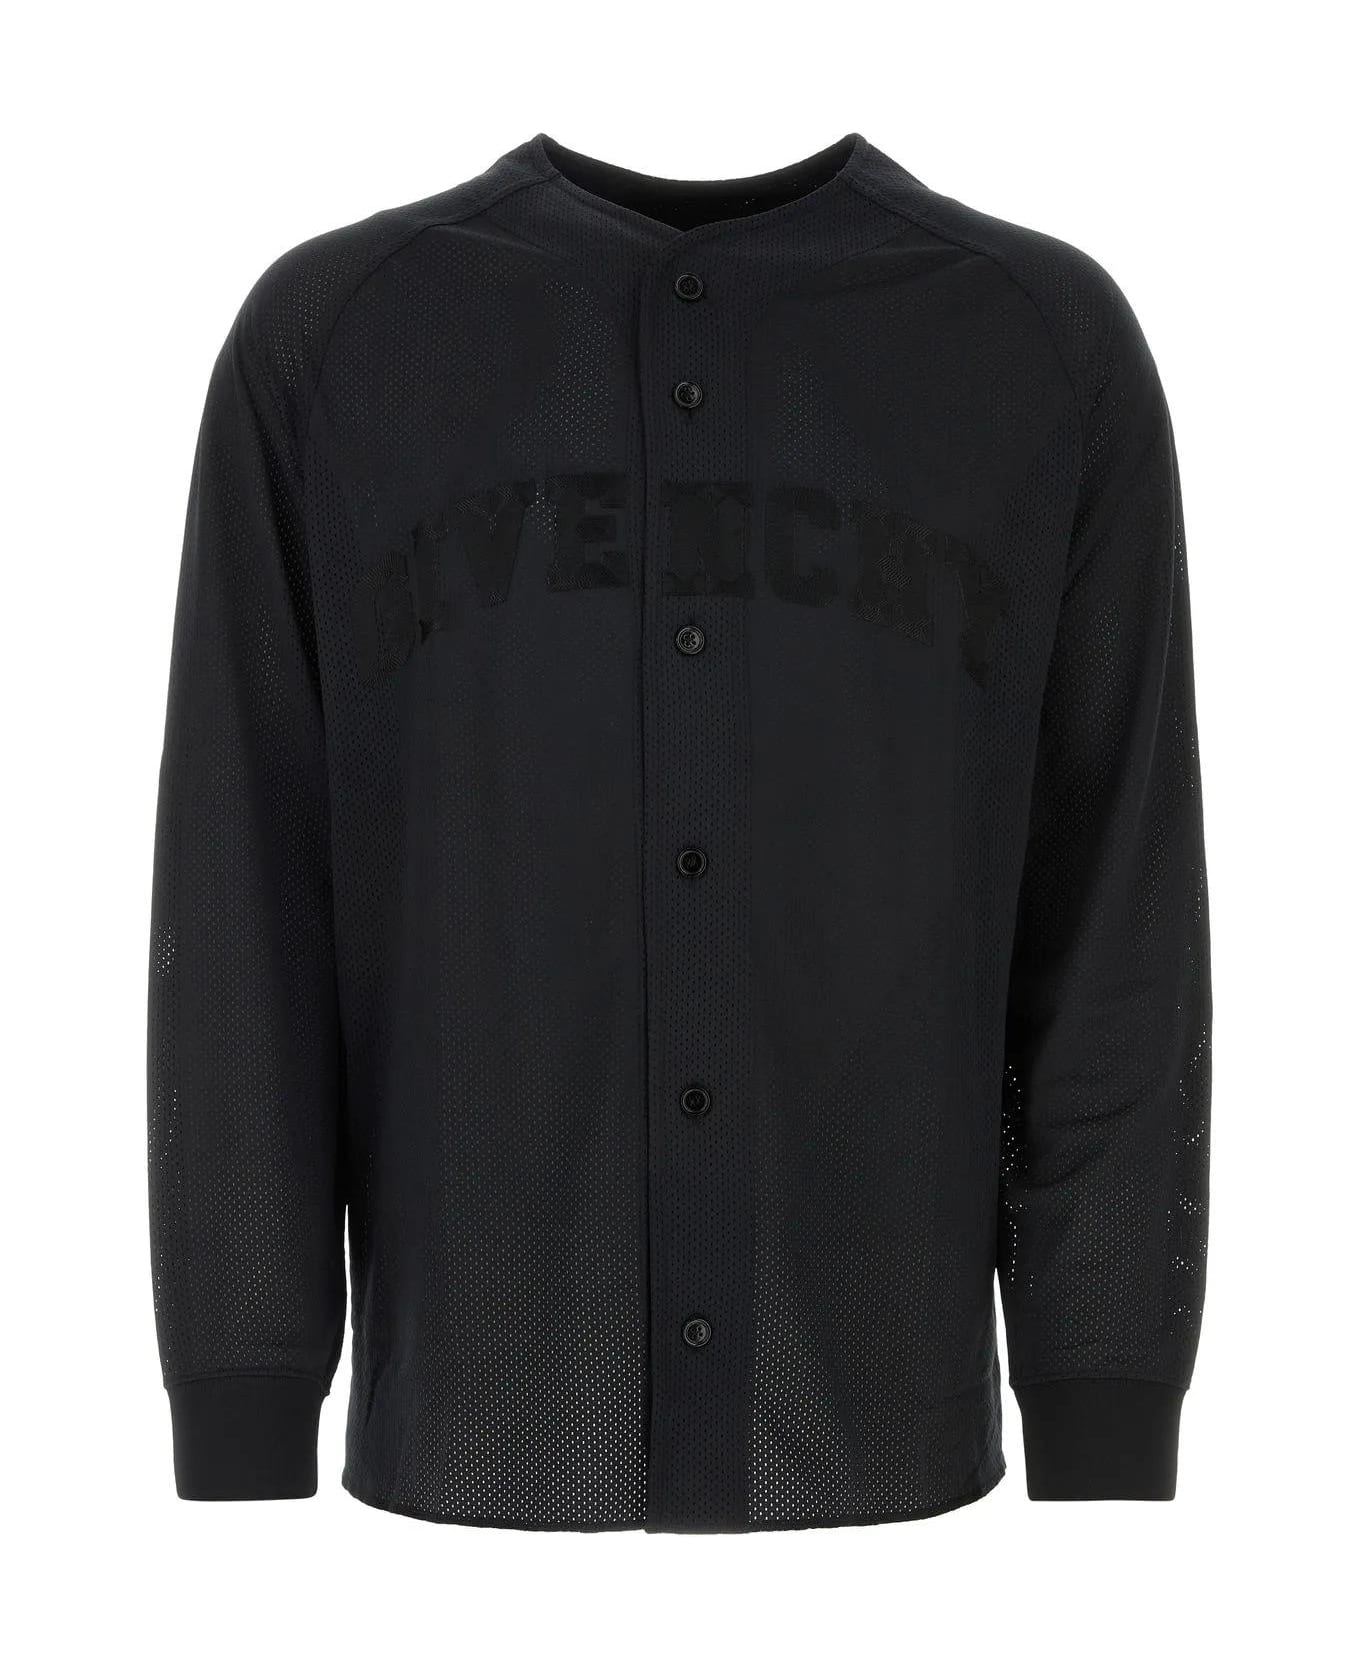 Givenchy College Baseball Shirt In Black Mesh - Black